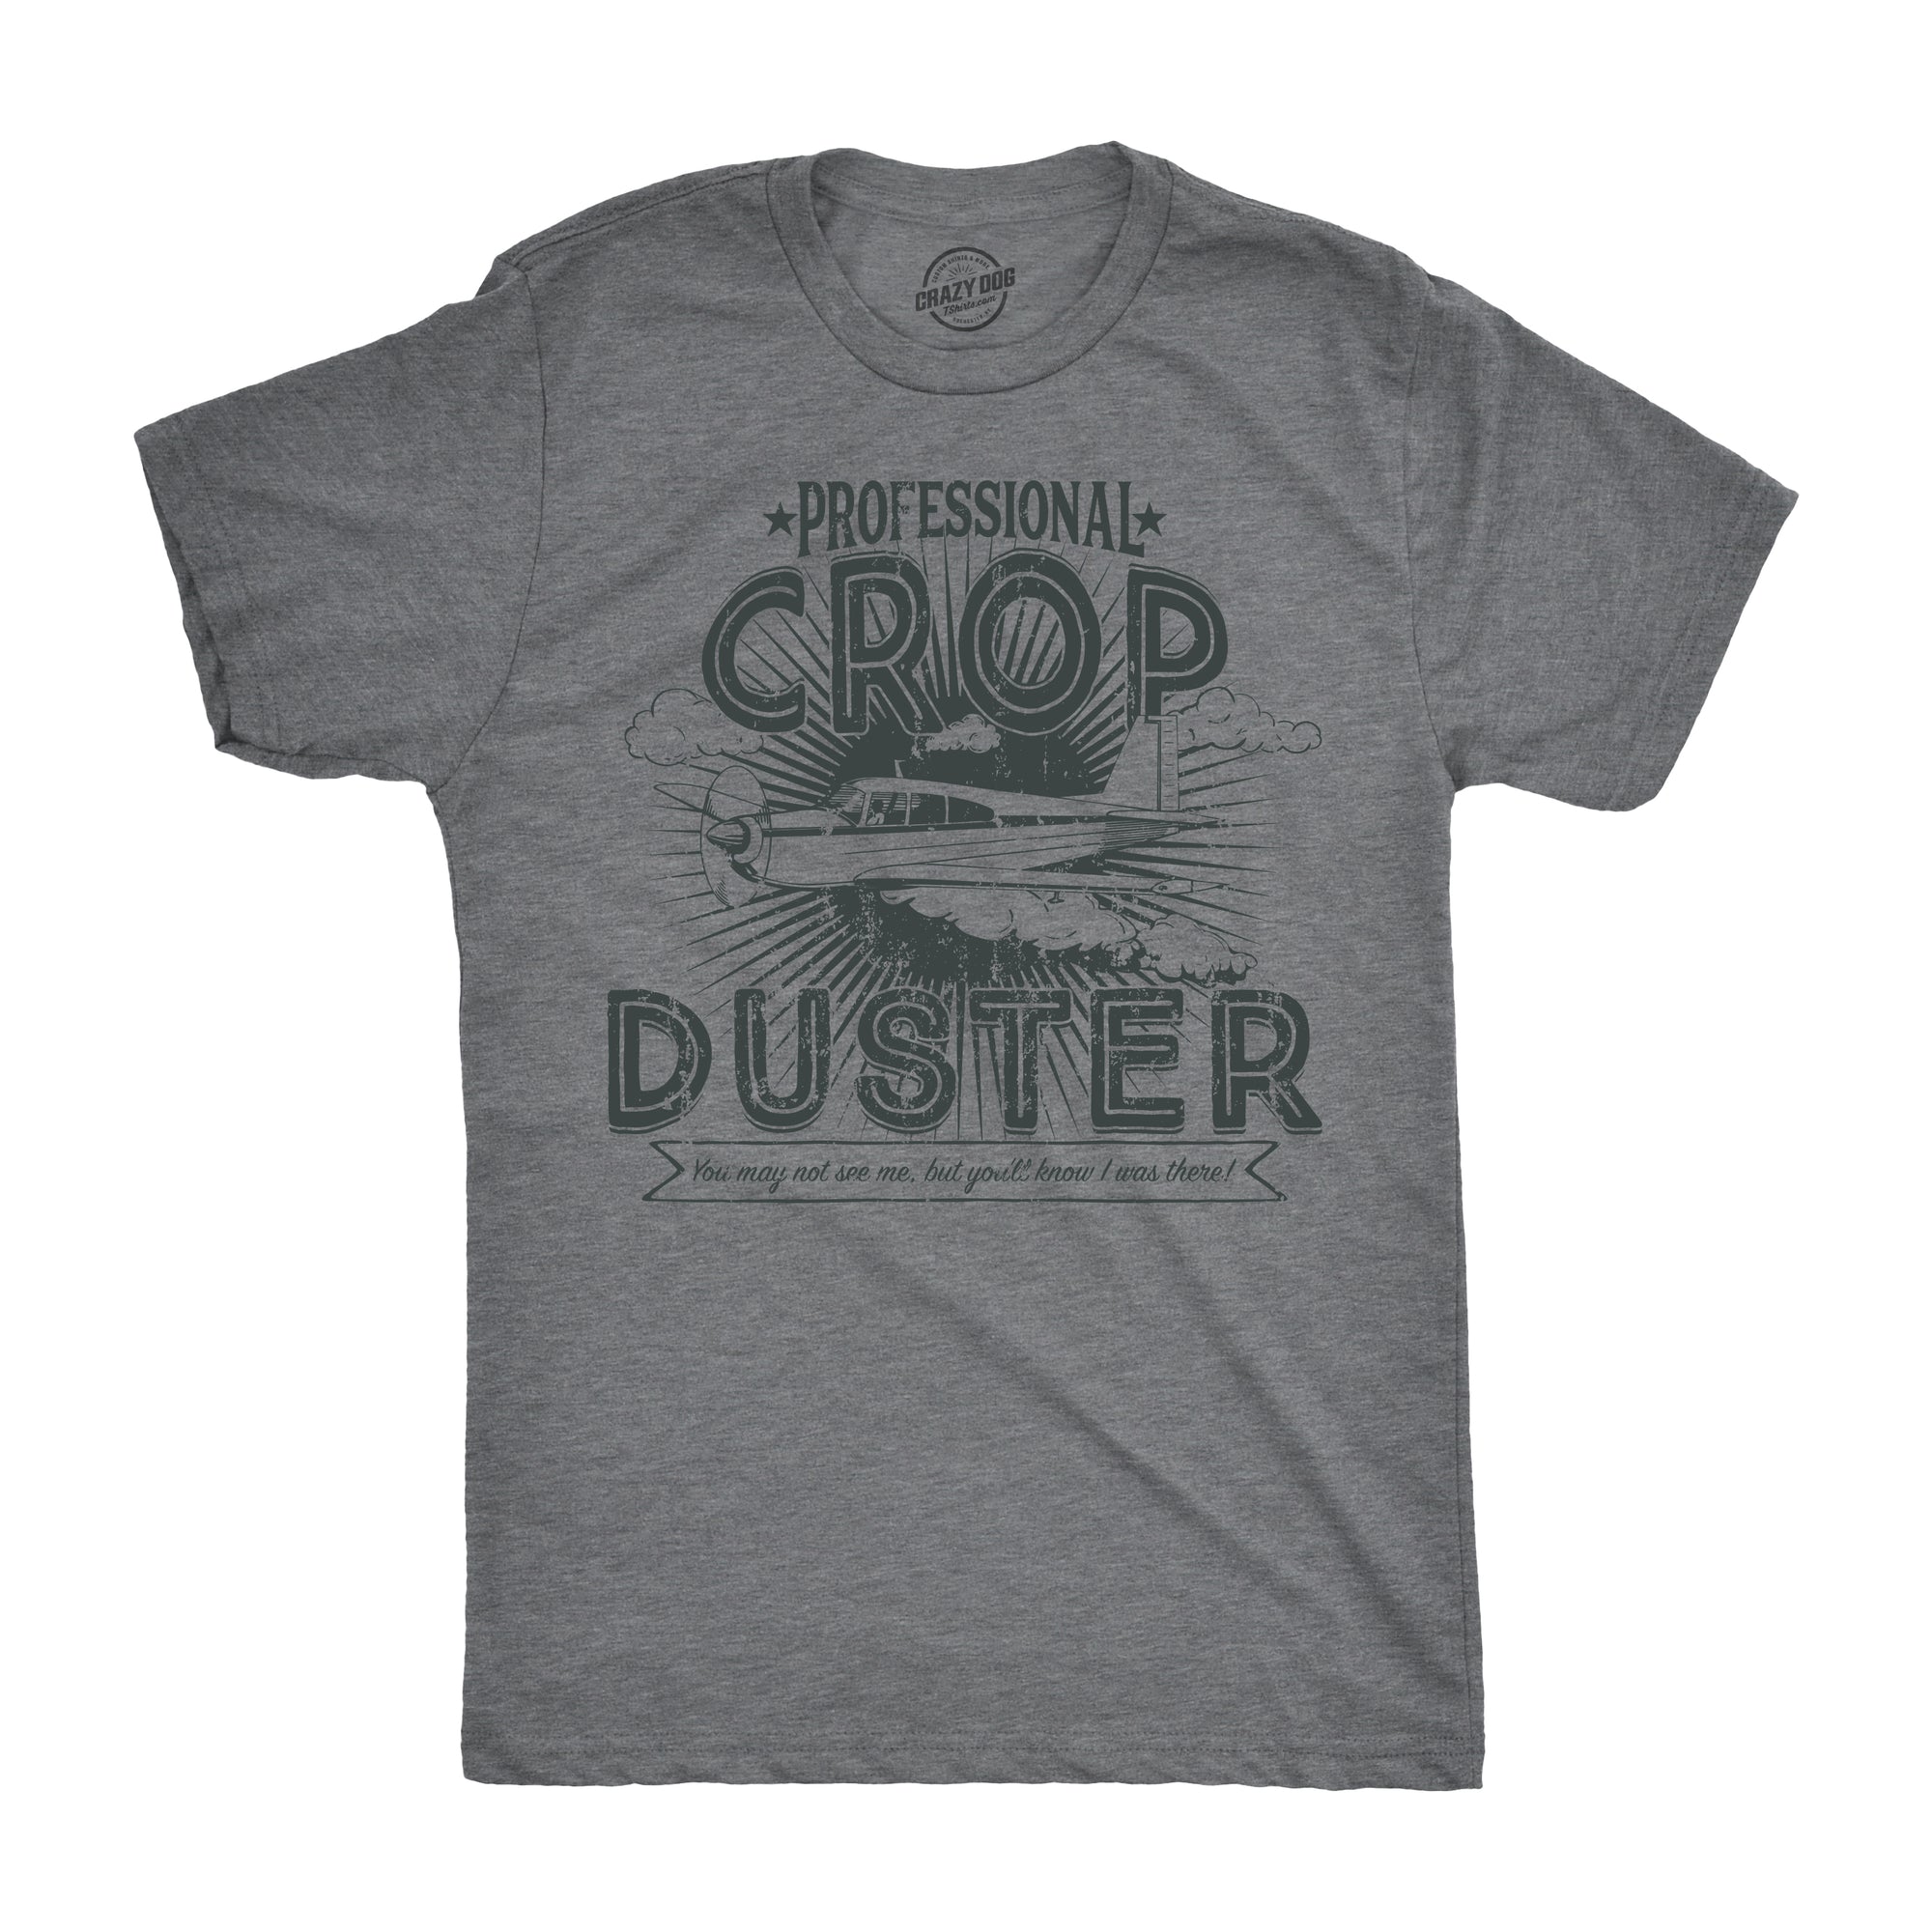 Funny Dark Heather Grey Professional Crop Duster Mens T Shirt Nerdy toilet Tee